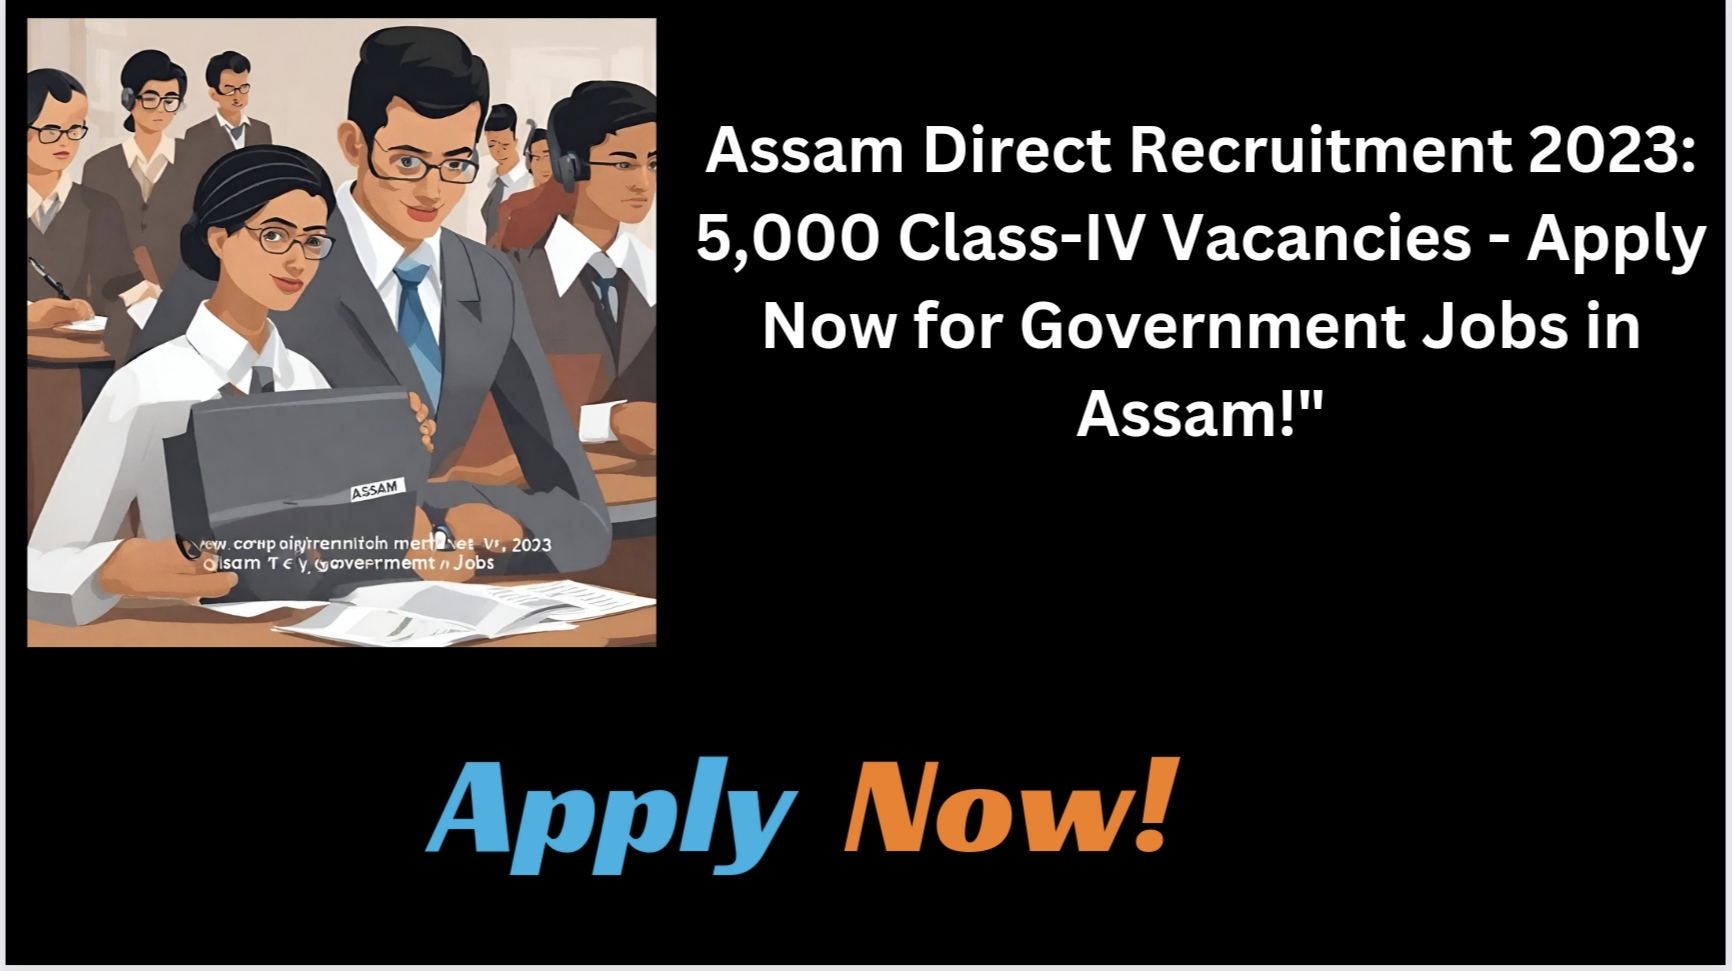 Assam Direct Recruitment 2023: 5,000 Class-IV Vacancies - Apply Now for Government Jobs in Assam!"